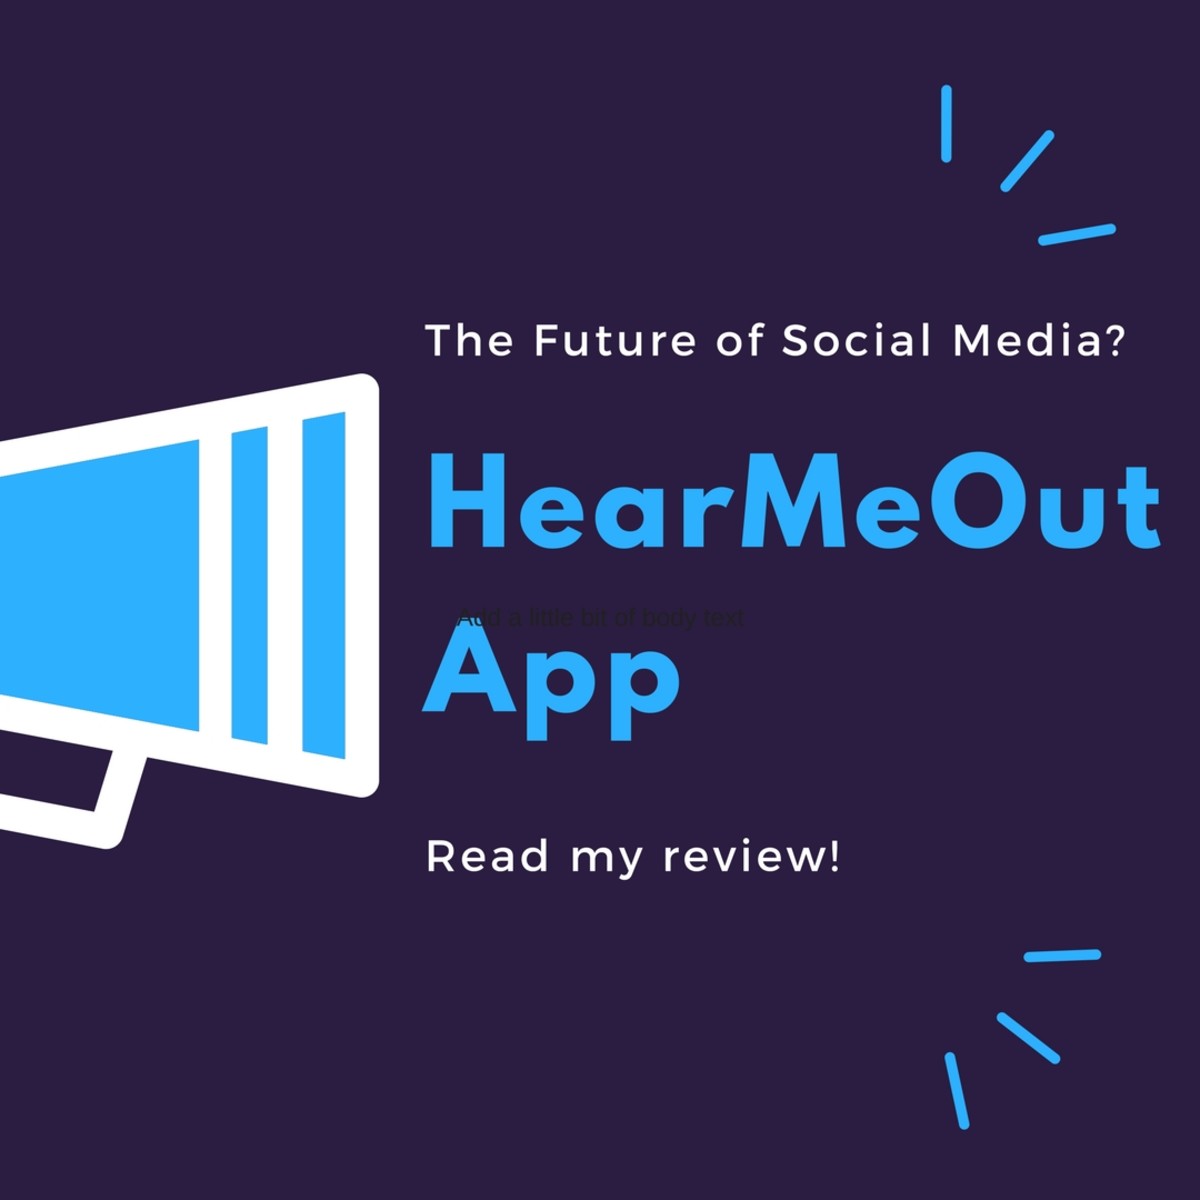 HearMeOut App: The Future of Social Media?